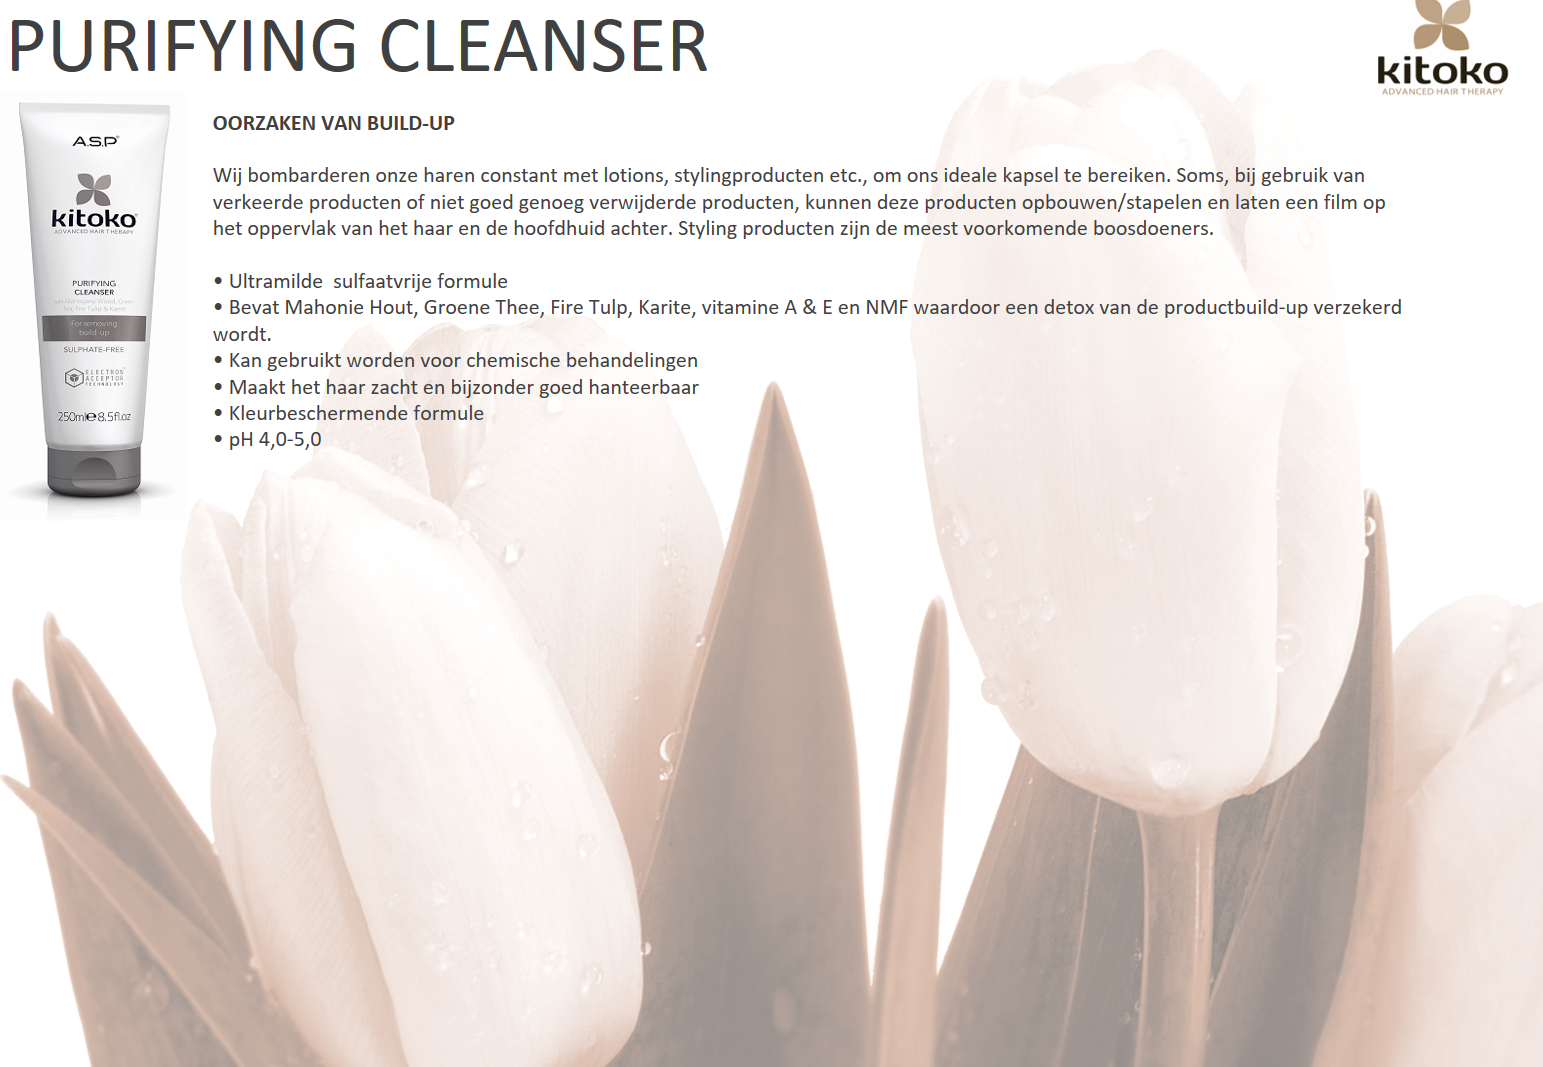 kitoko-purifying-cleanser.png